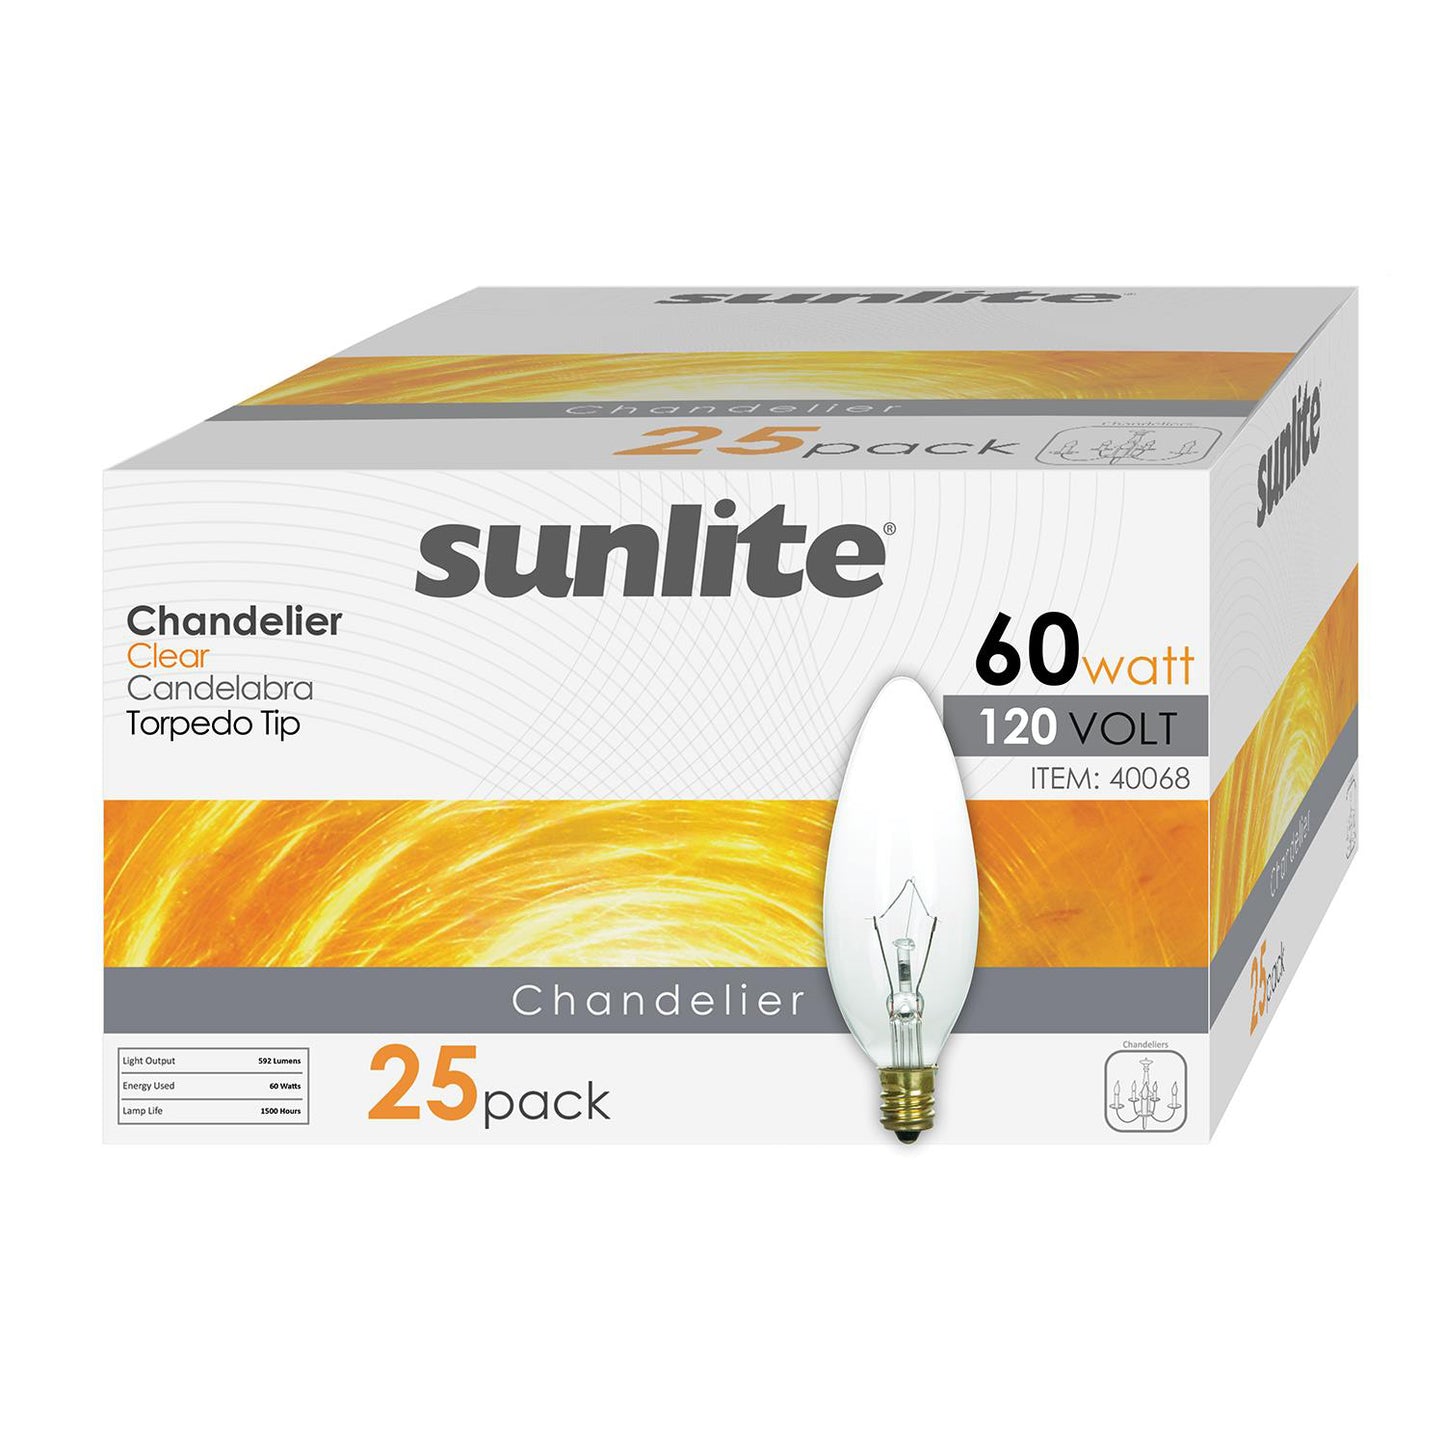 Sunlite 60 Watt Incandescent Chandelier Bulb, Candelabra (E12) Base, Soft White (2600K), Clear, Torpedo Tip, Classic & Beautiful Natural Light Appearance 100 CRI 25 Pack